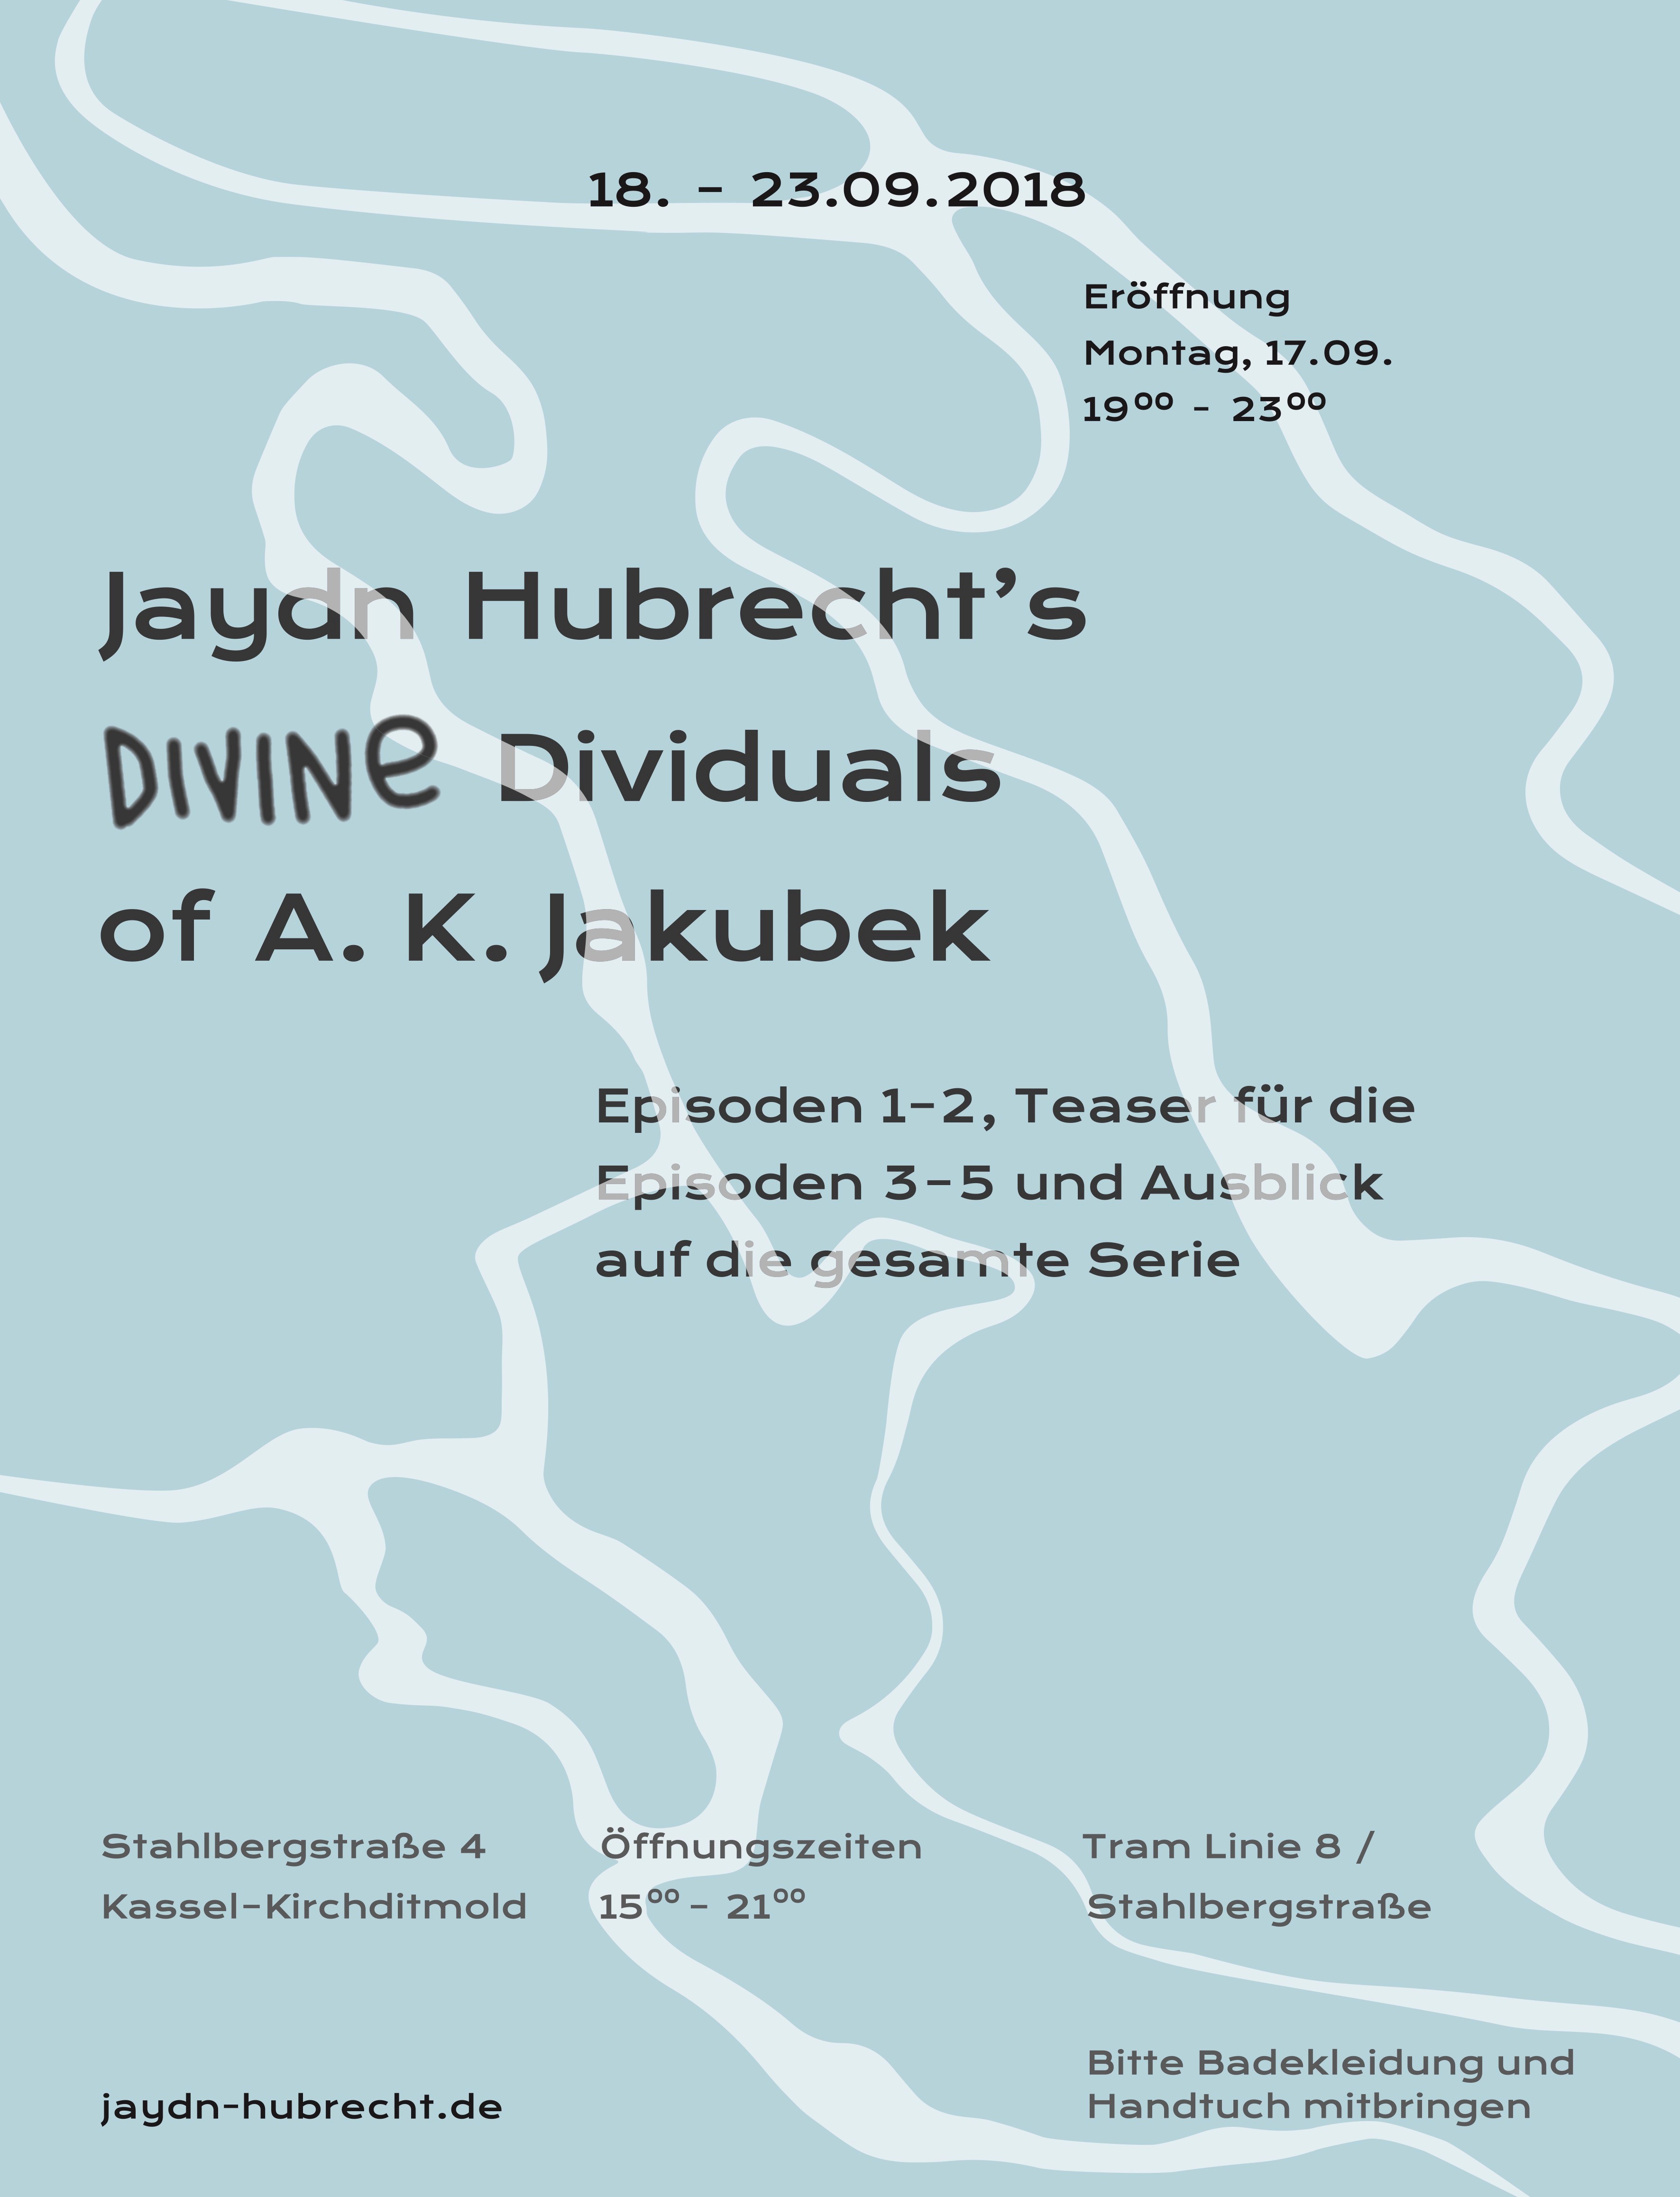 Jaydn Hubrecht's Divine Dividuals of A. K. Jakubek